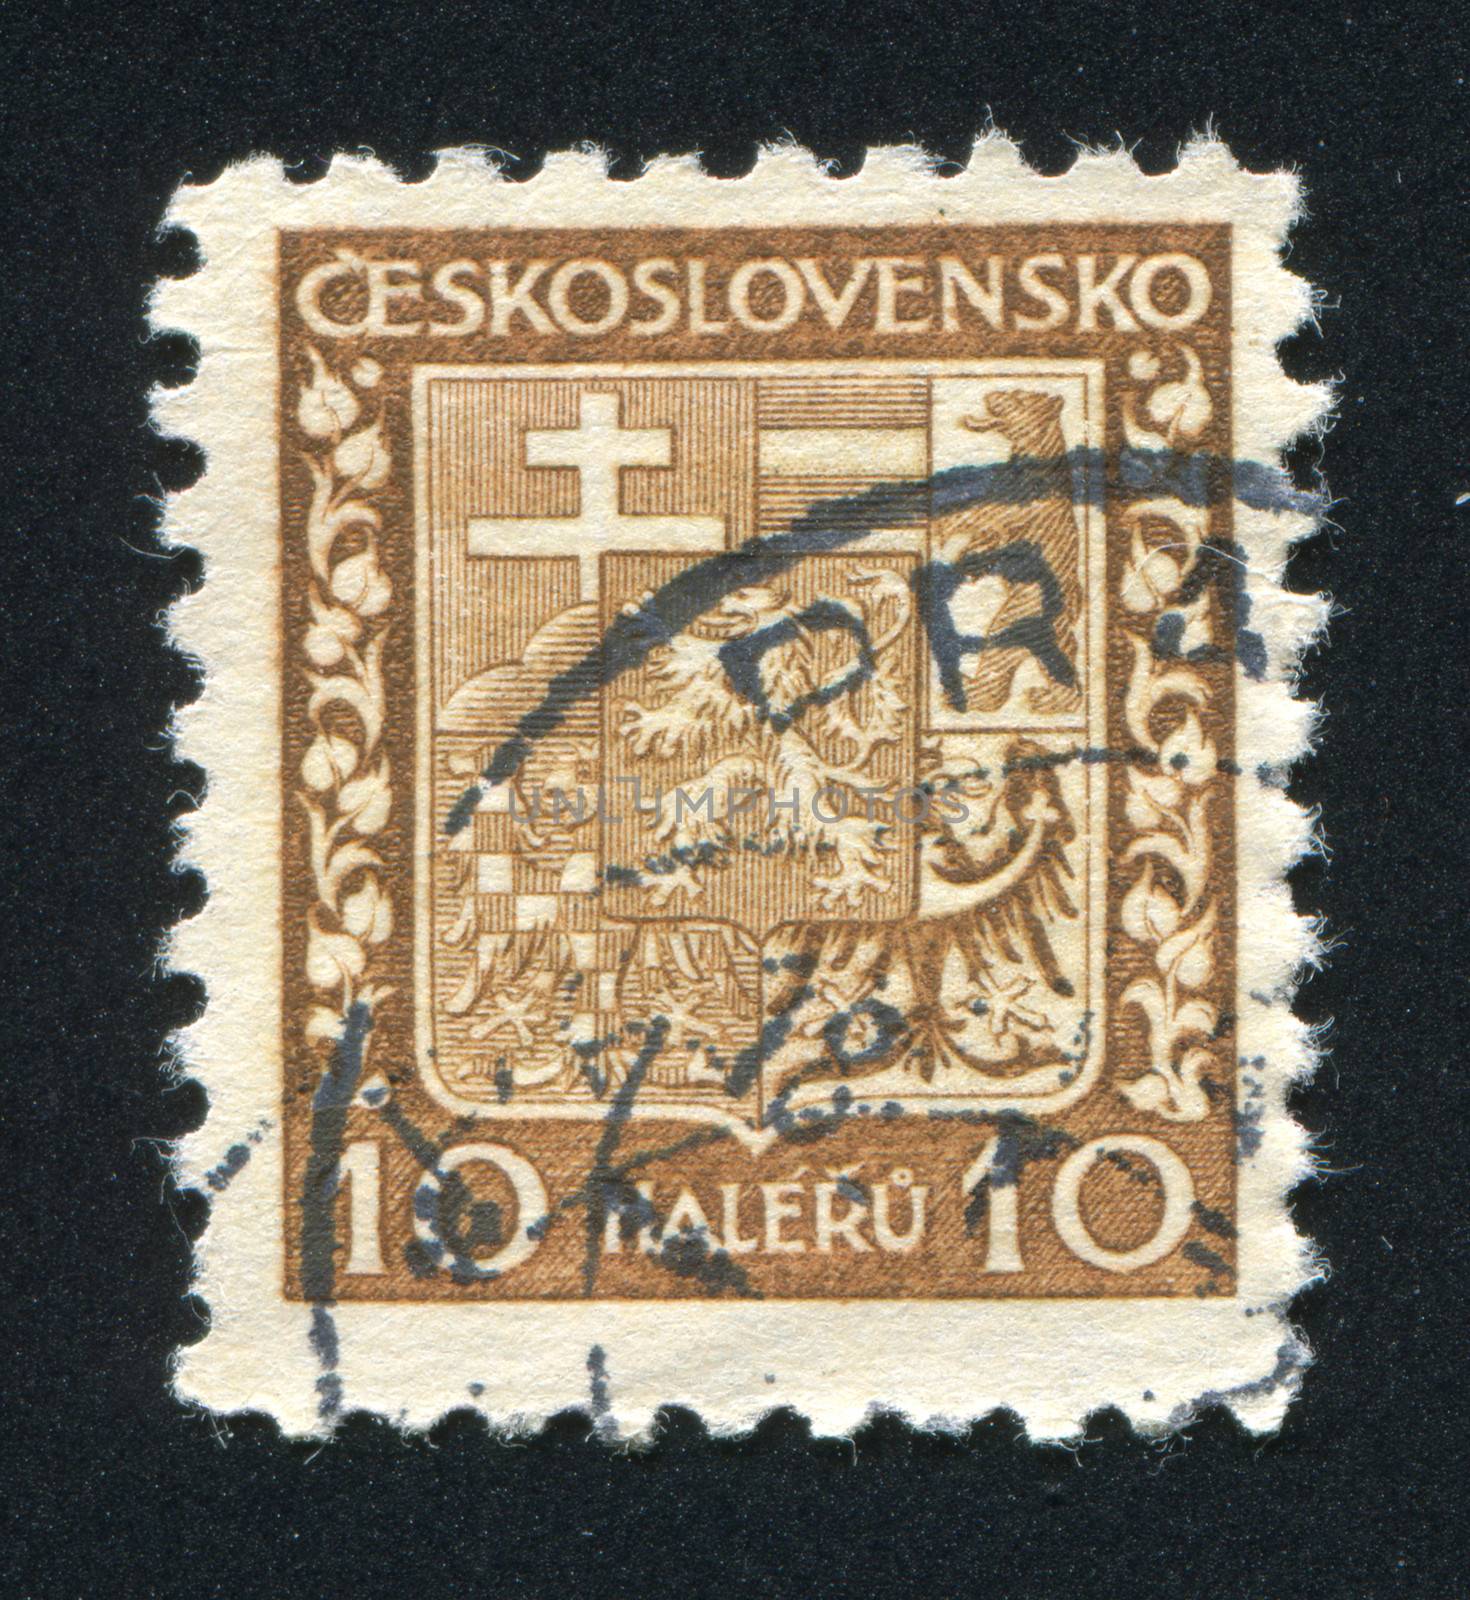 CZECHOSLOVAKIA - CIRCA 1928: stamp printed by Czechoslovakia, shows Coat of Arms, circa 1928